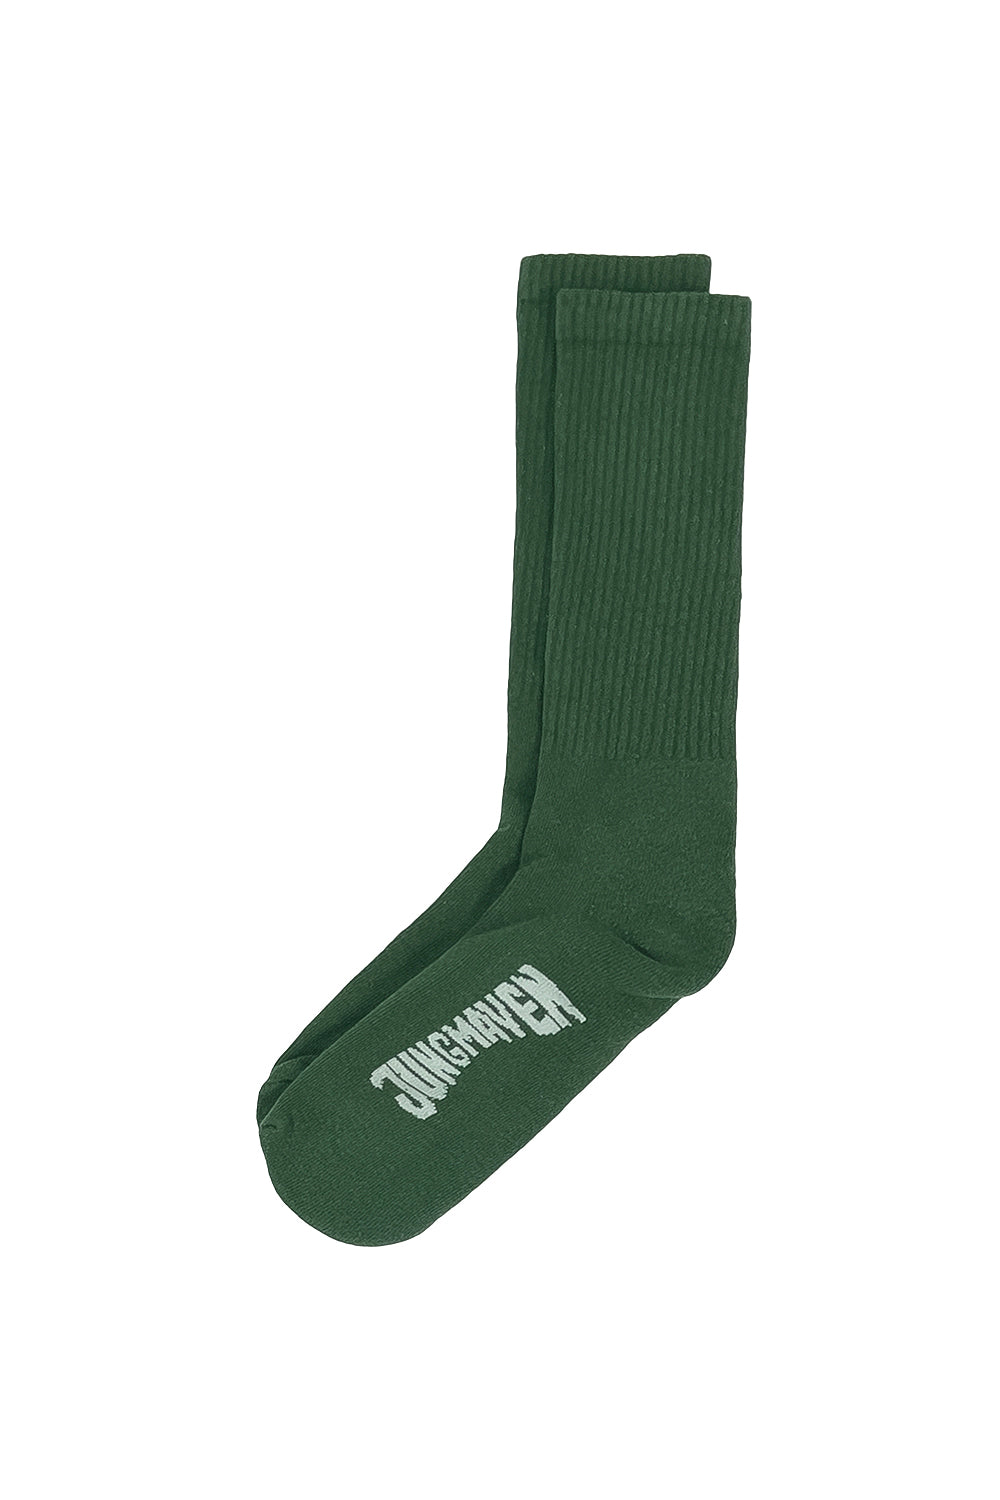 Hemp Crew Socks | Jungmaven Hemp Clothing & Accessories / Color: Hunter Green OS